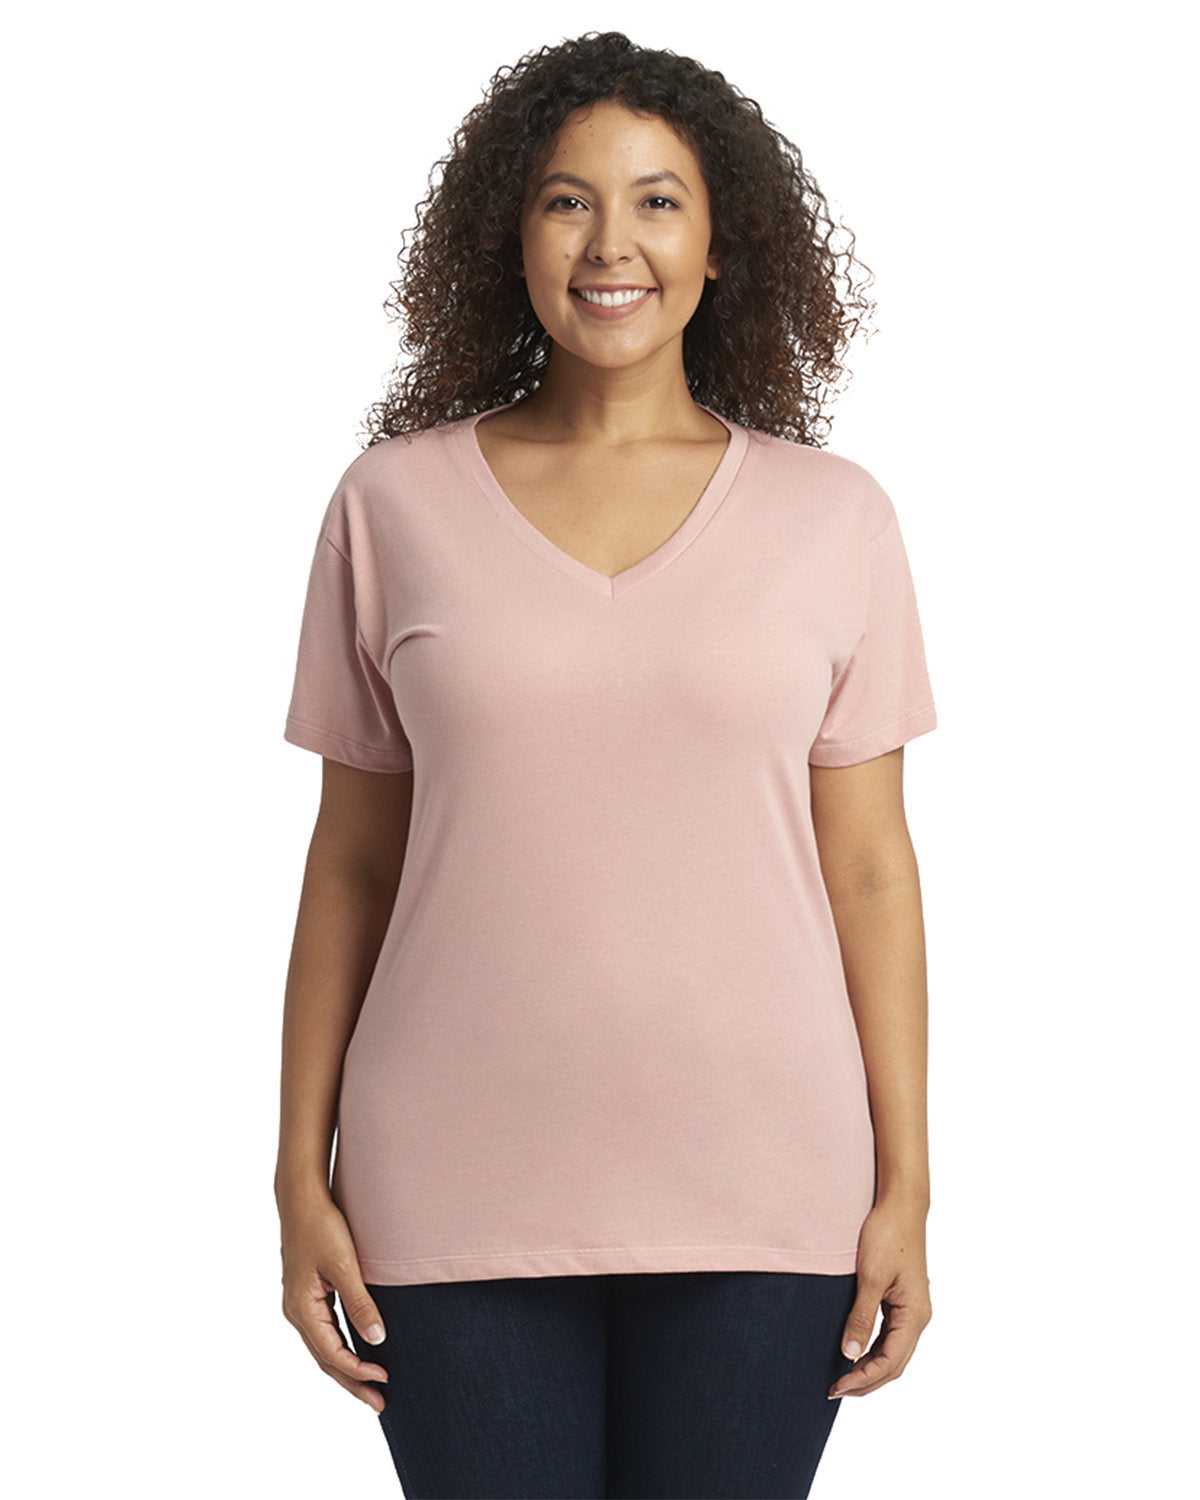 Next Level 3940 Womens Cotton V-Neck T-Shirt - Desert Pink - HIT a Double - 1